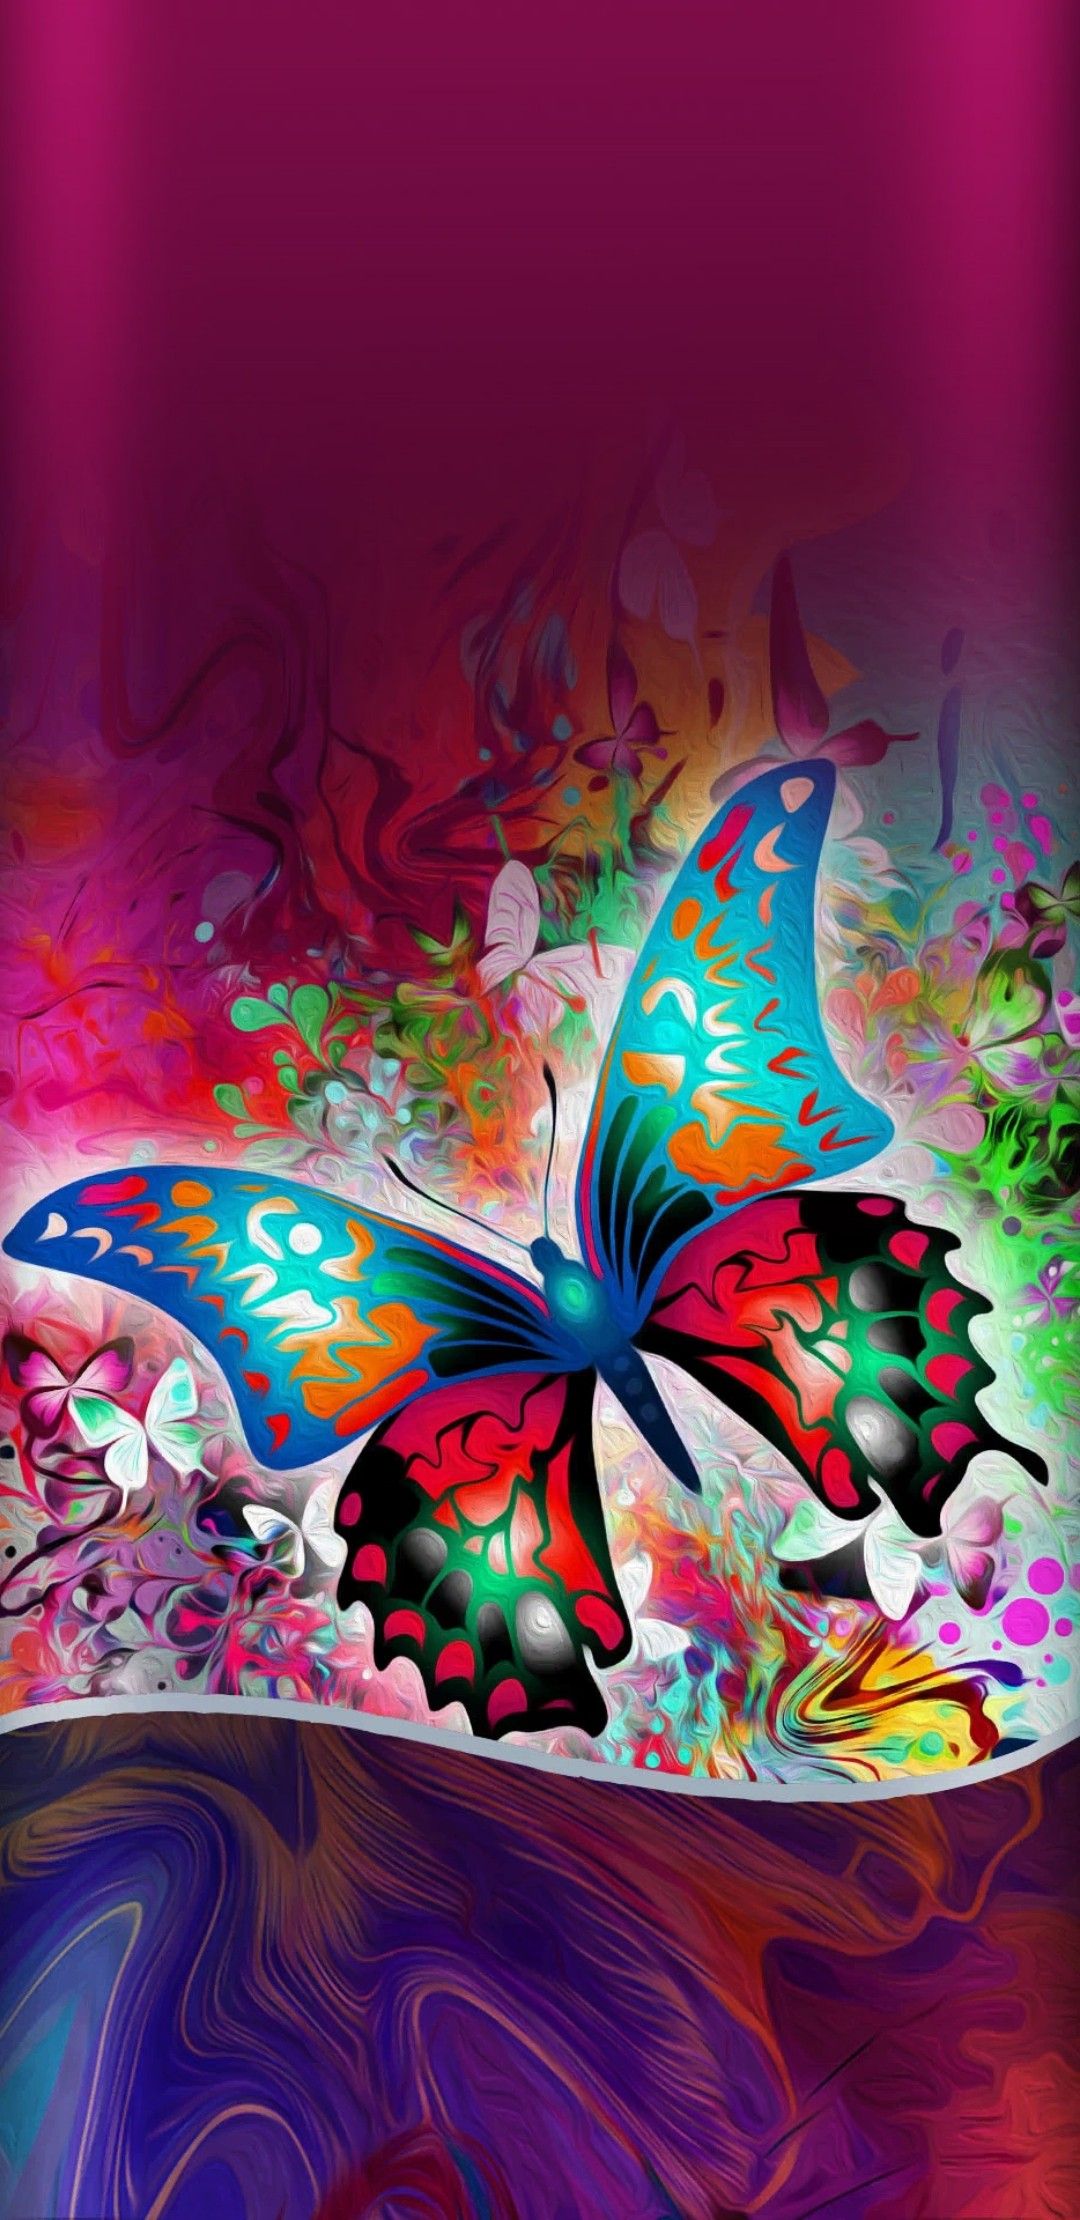 Wallpaper. By Artist Unknown. Butterfly wallpaper background, Butterfly wallpaper, S8 wallpaper